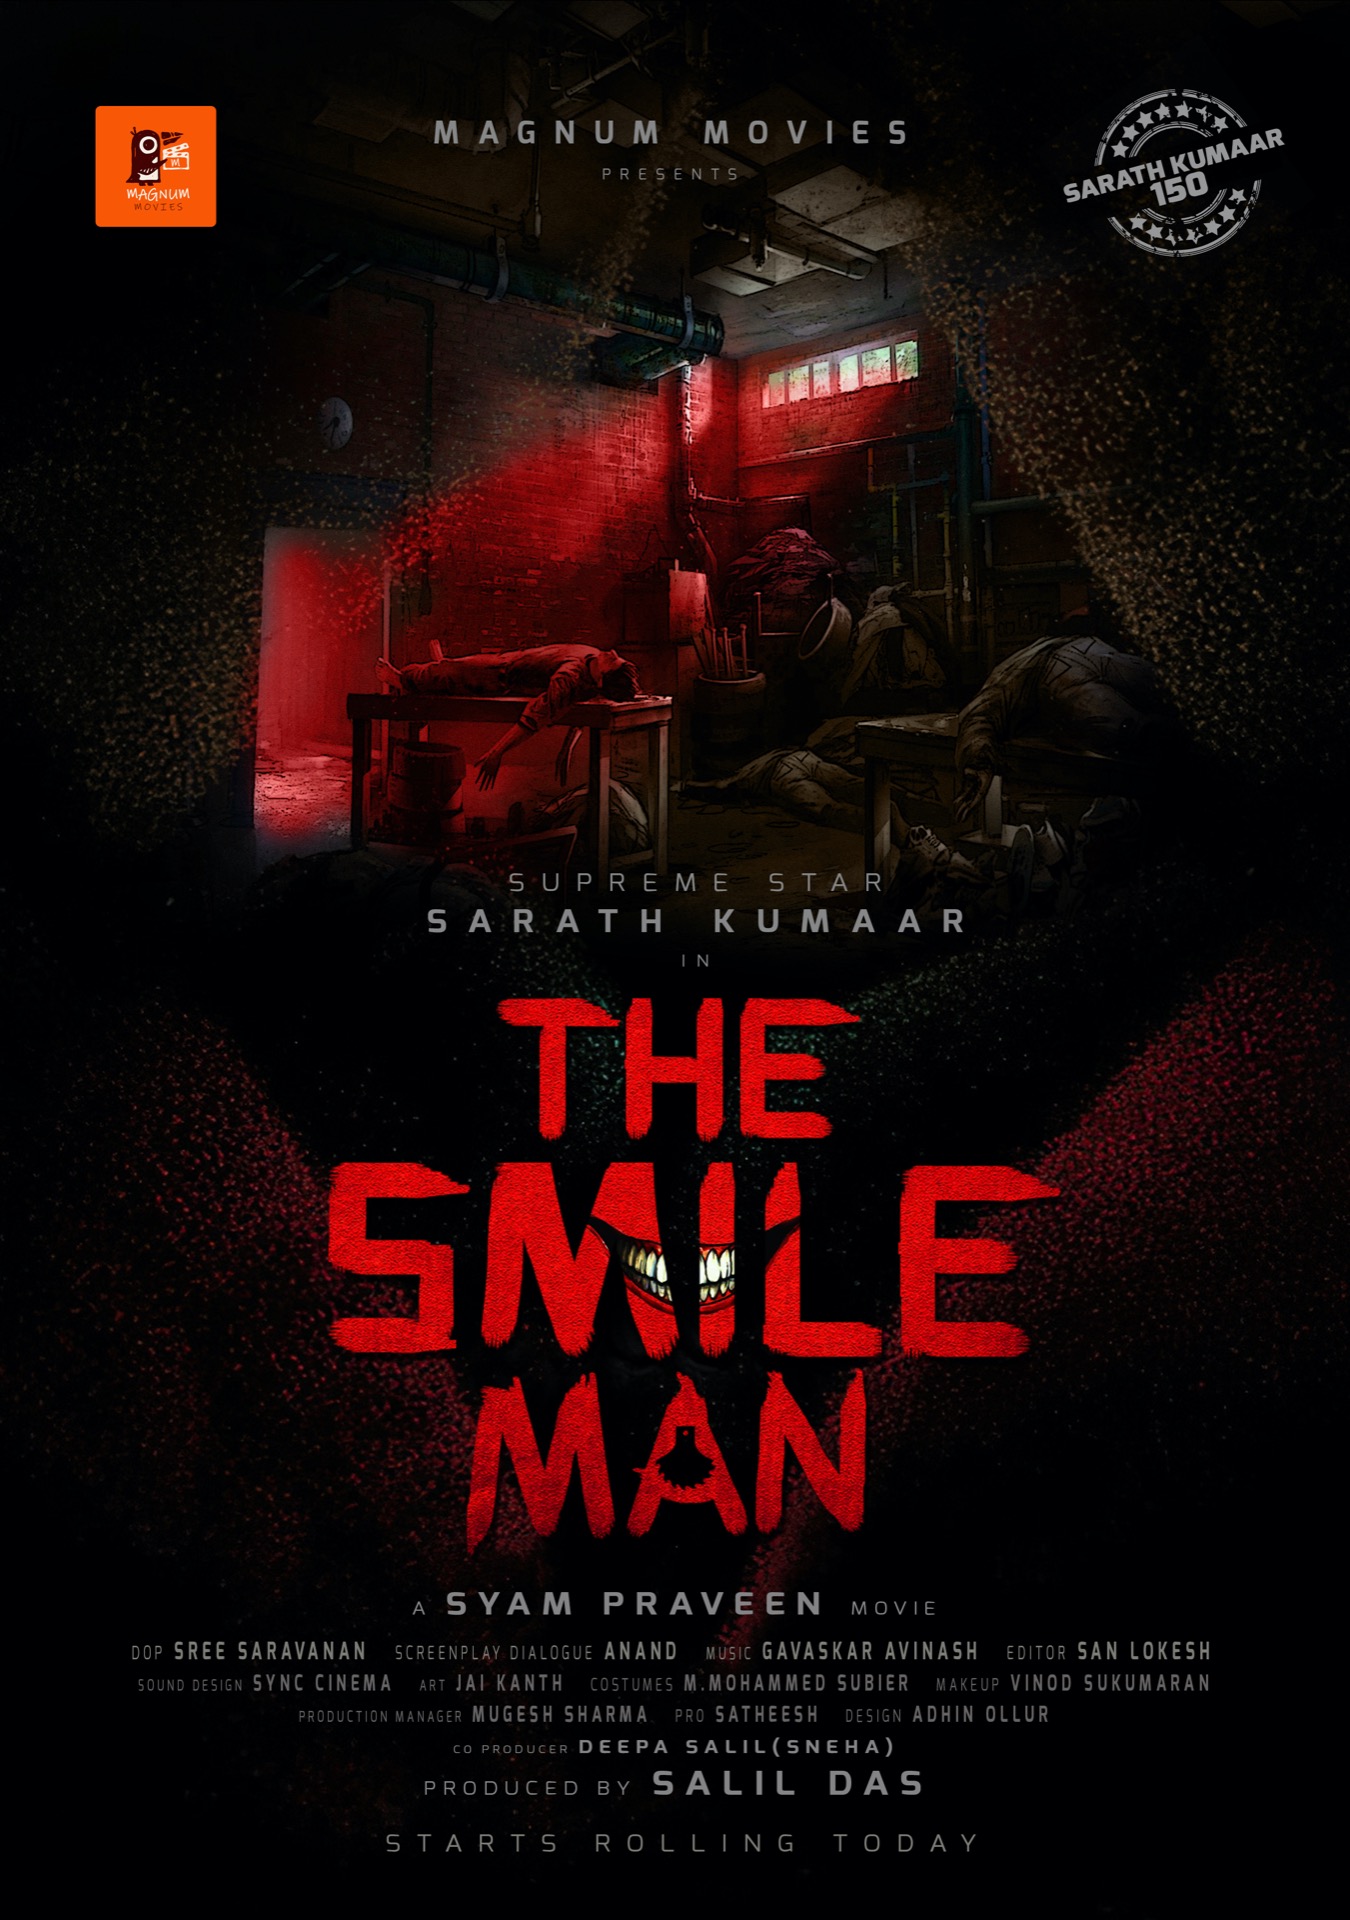 Supreme Star Sarathkumaar 150th movie THE SMILE MAN சரத்குமார்